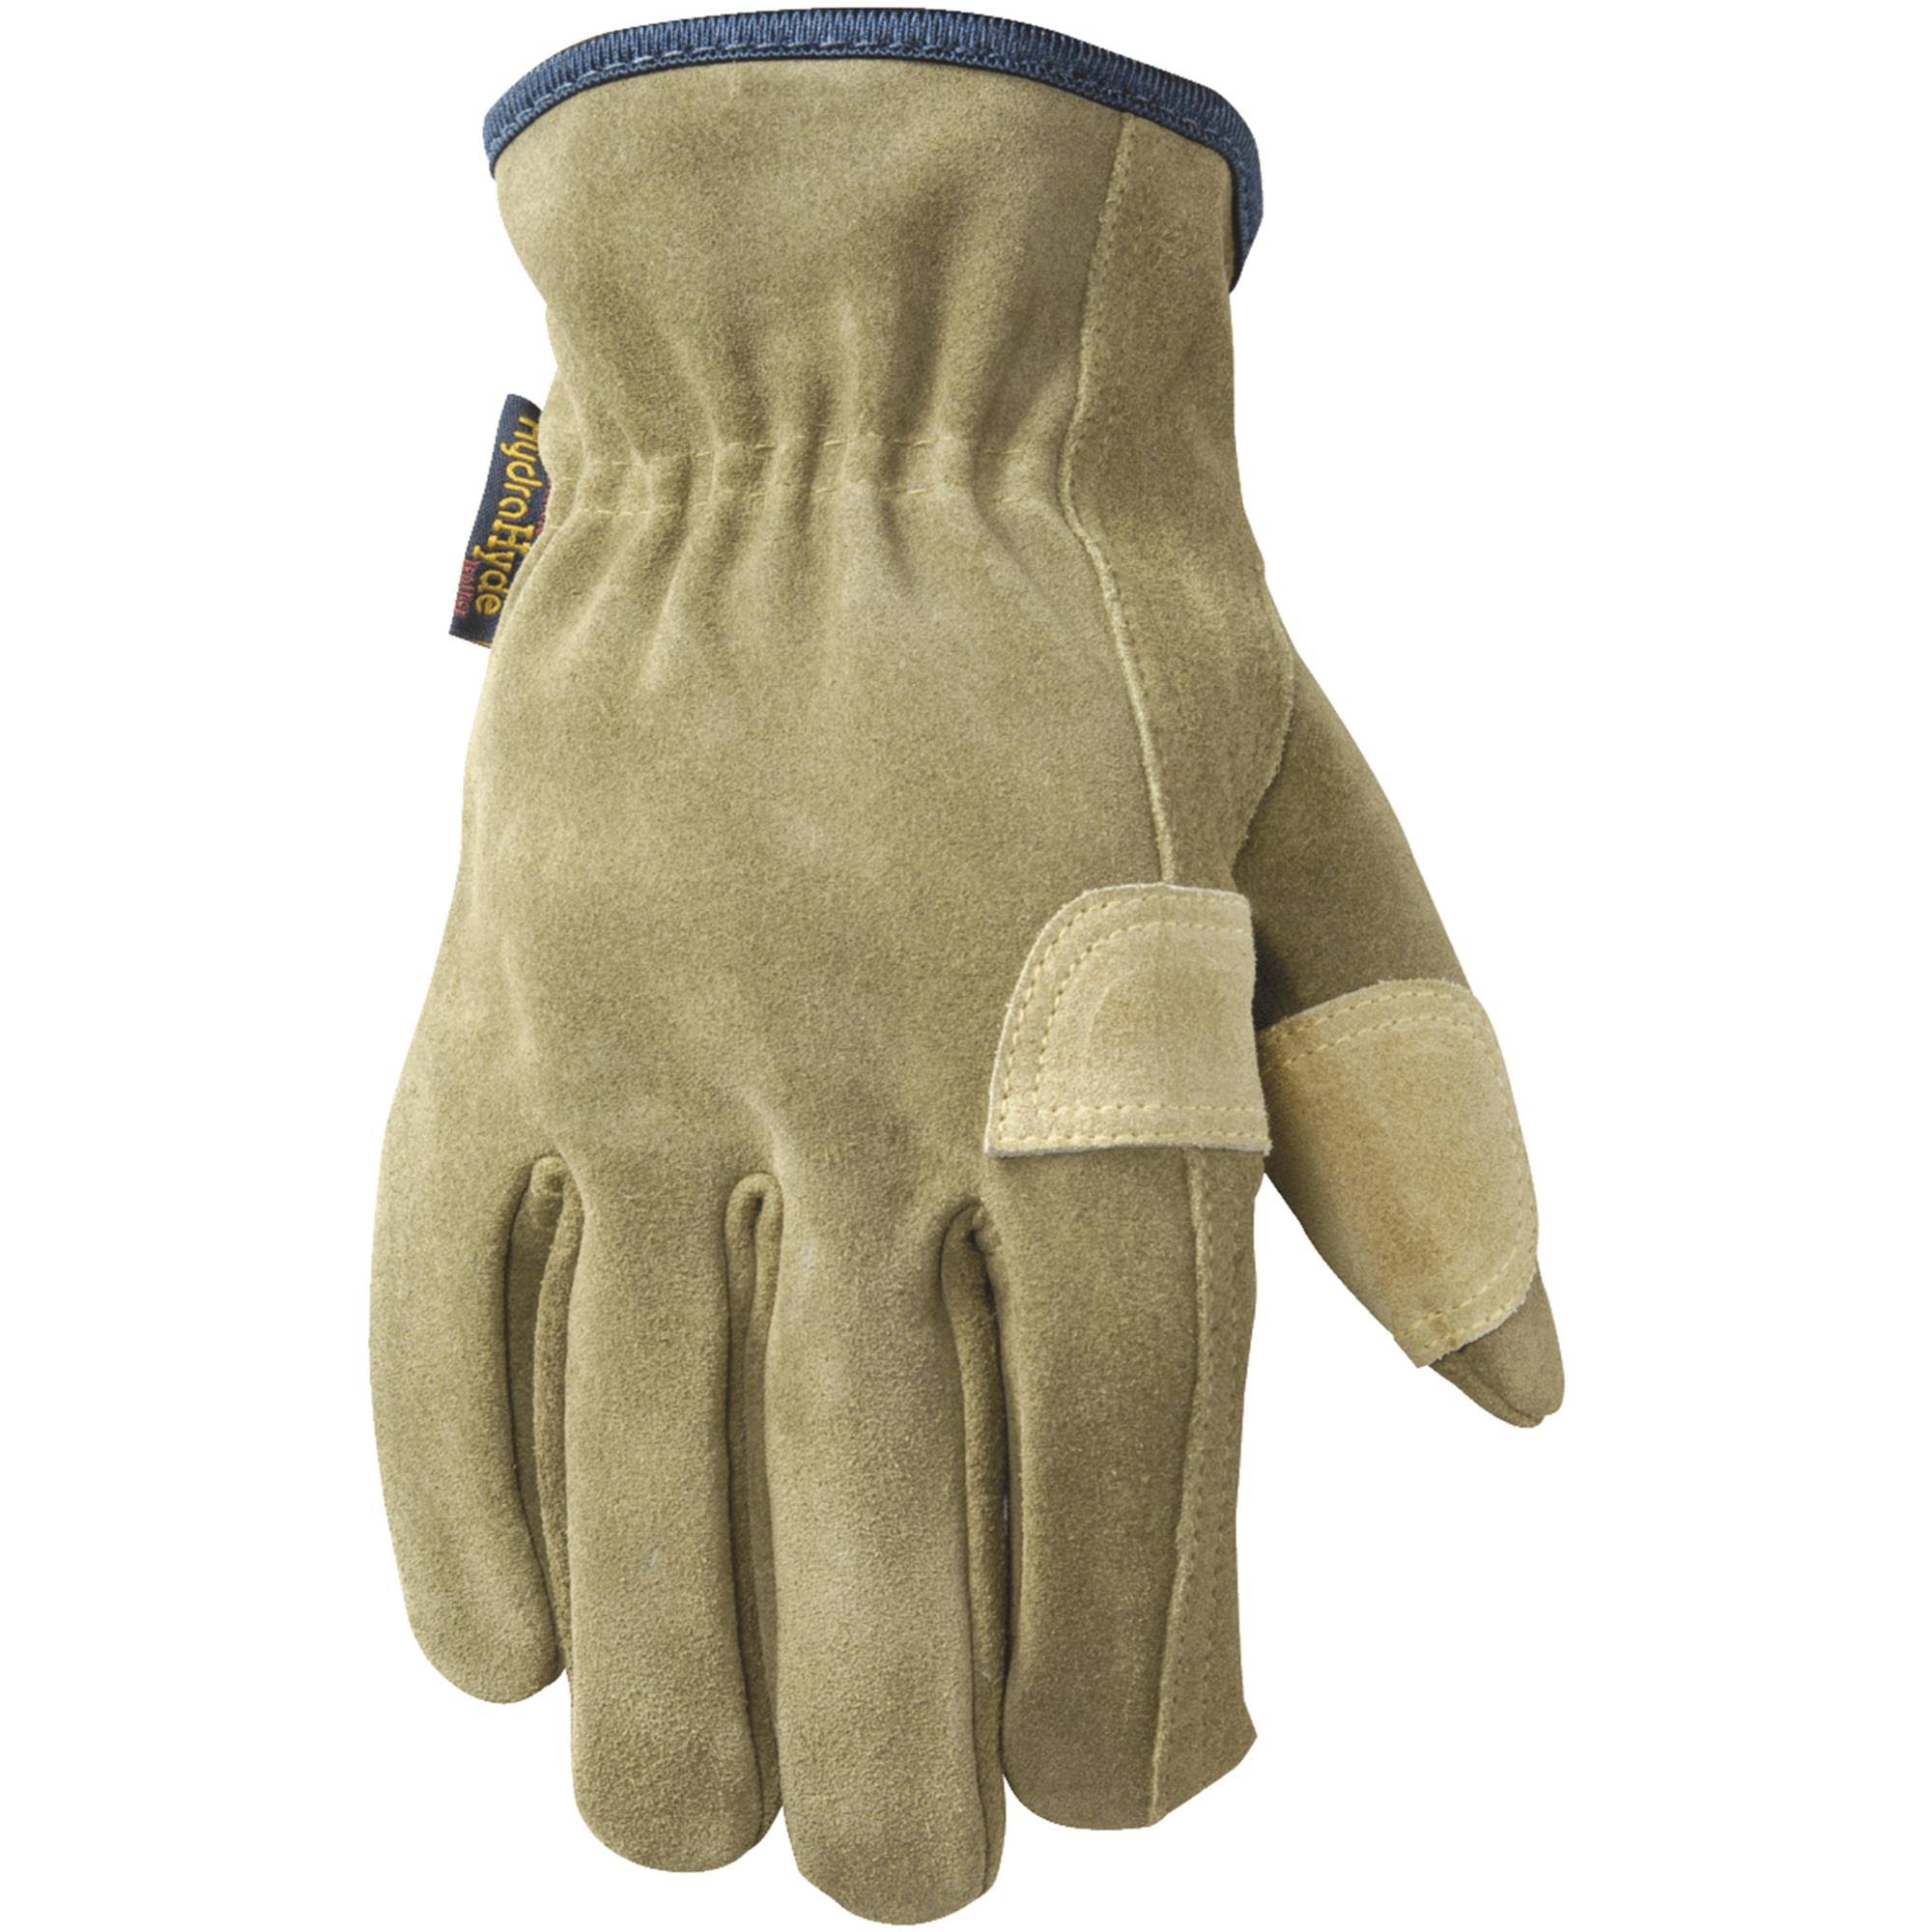 Wells Lamont 1019M Hydrahyde Cowhide Leather Work Glove - Medium